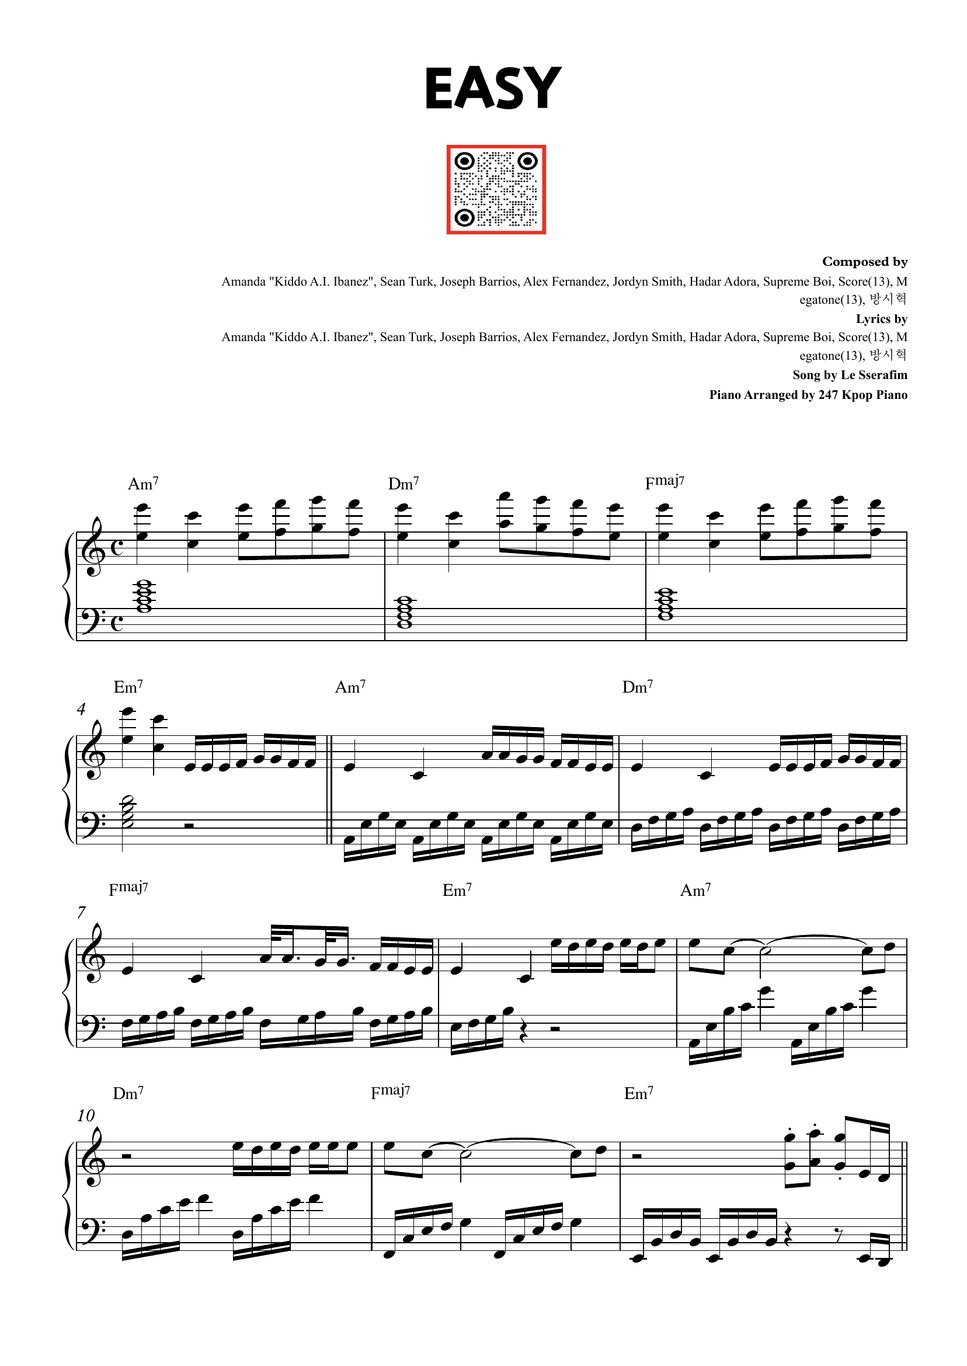 Le Sserafim - Easy by 247 Kpop Piano